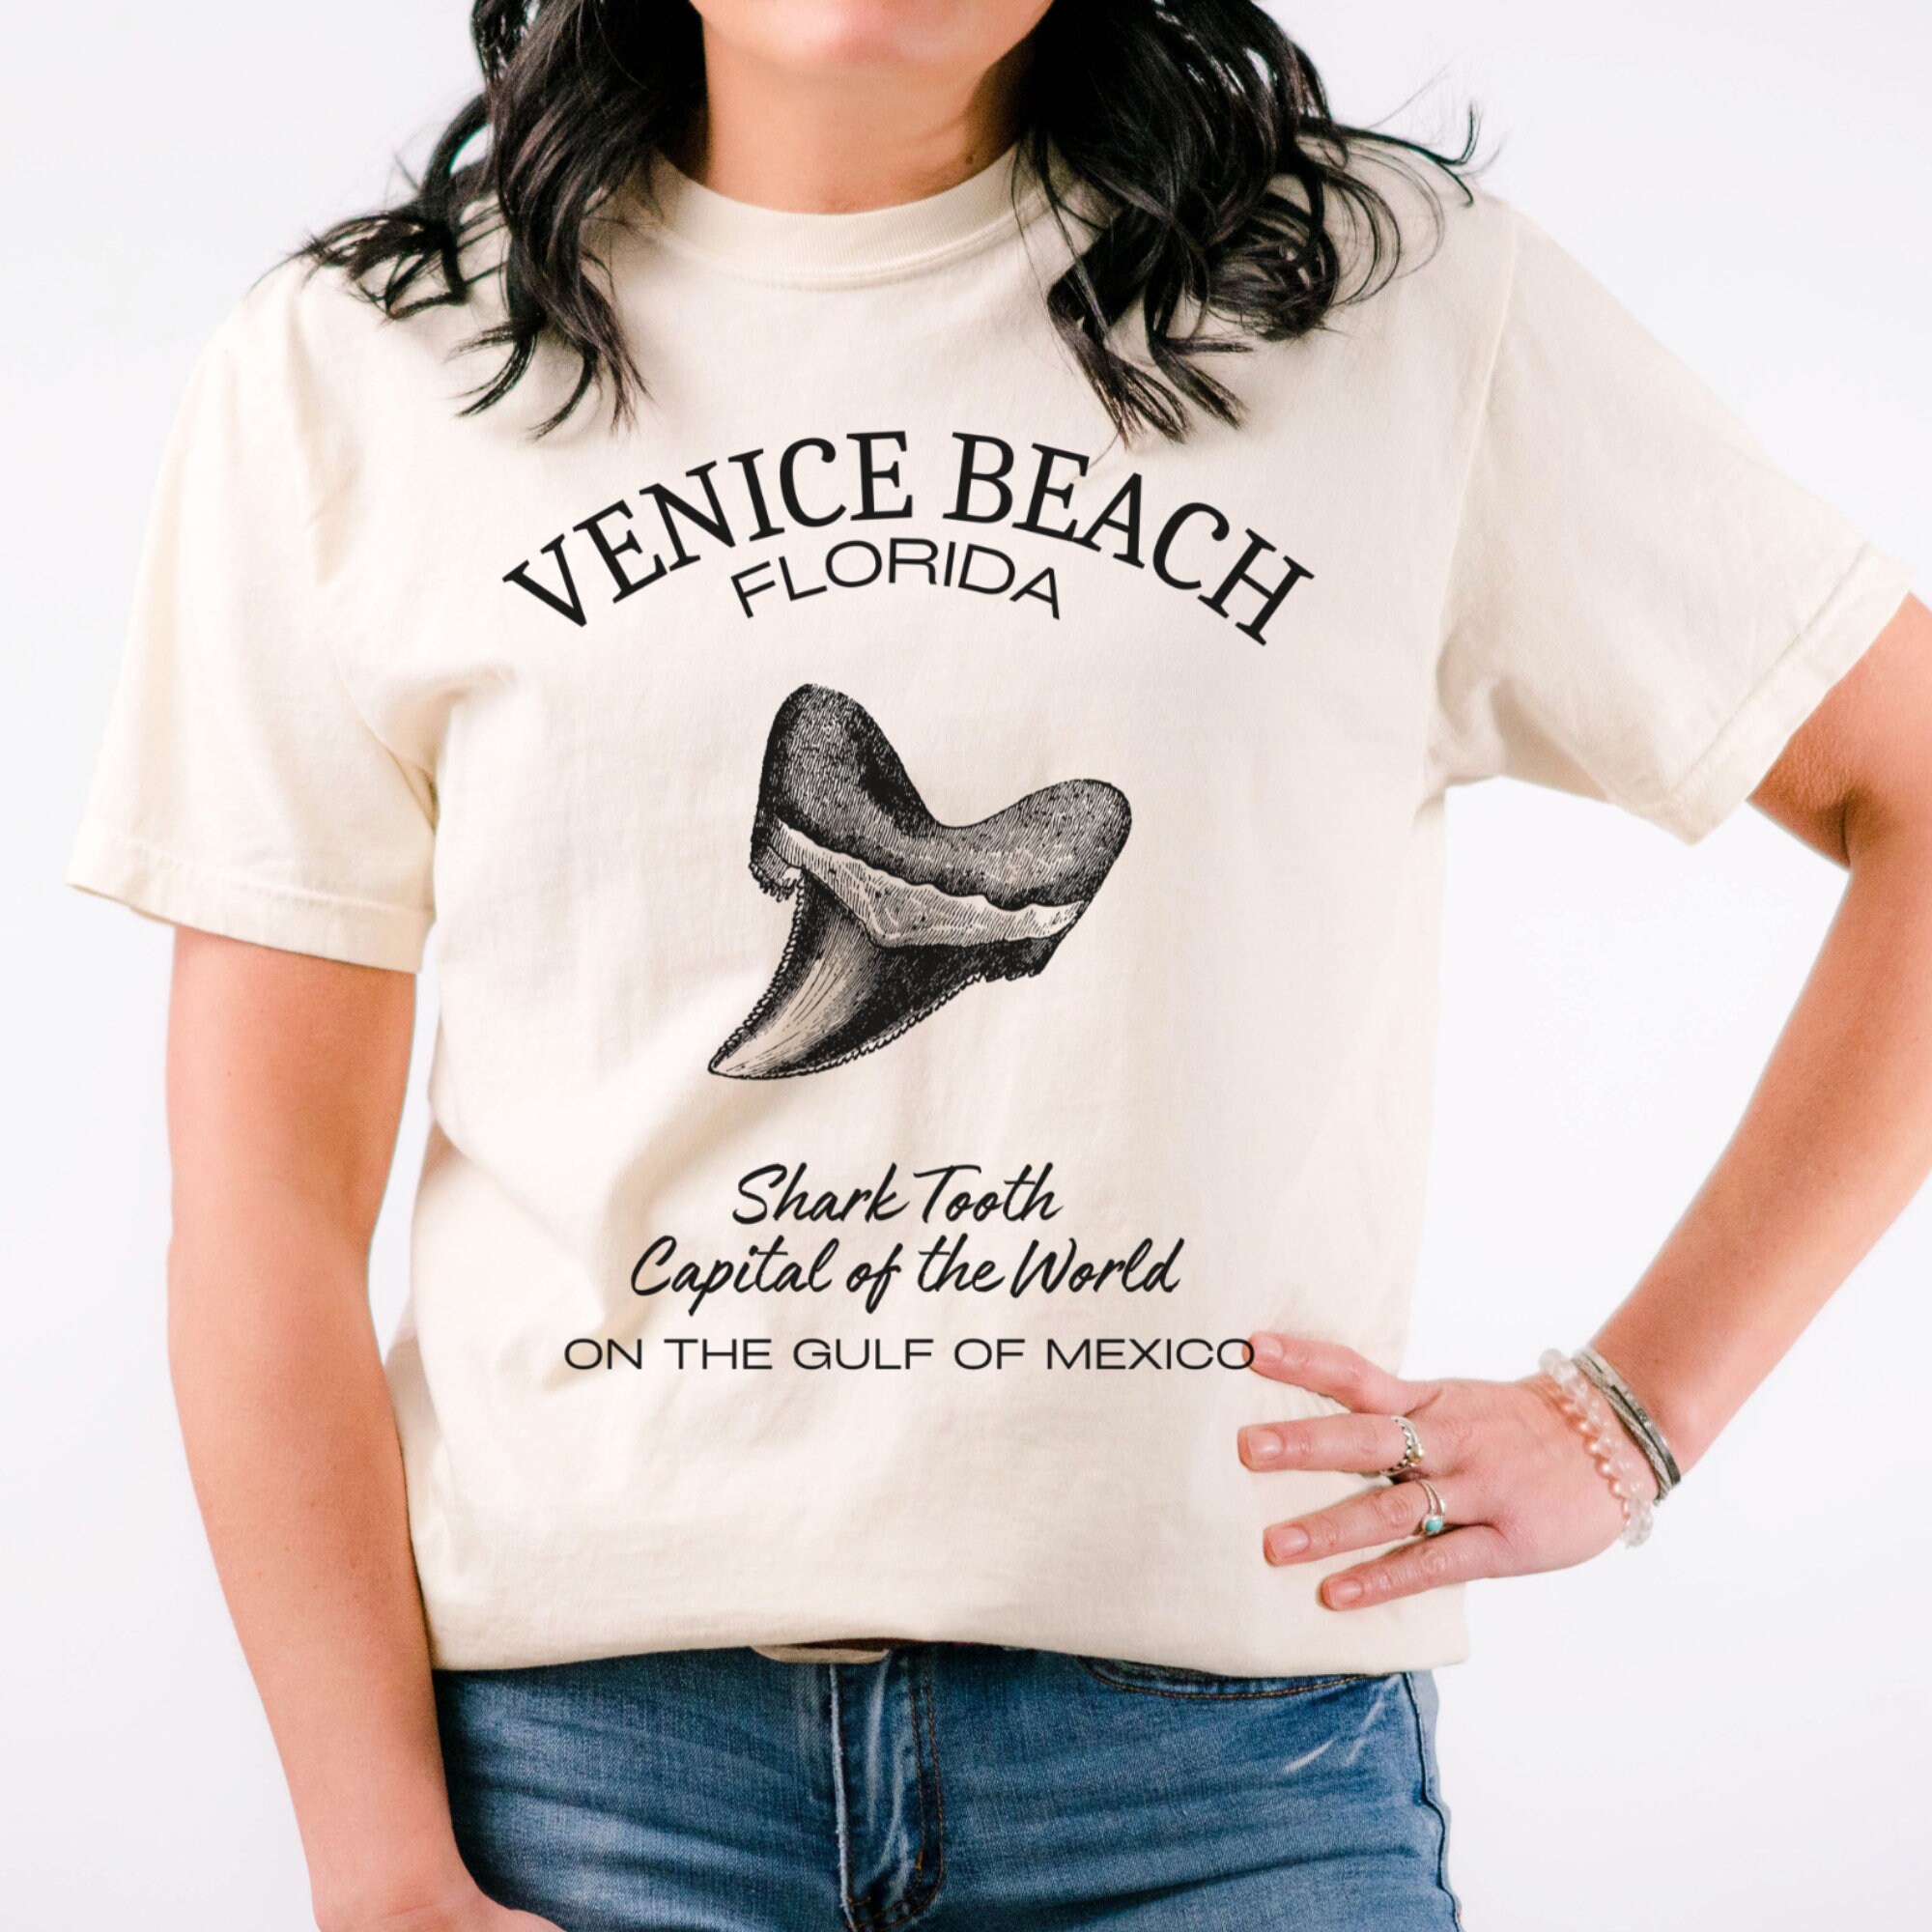 Venice Beach T Shirt - Etsy